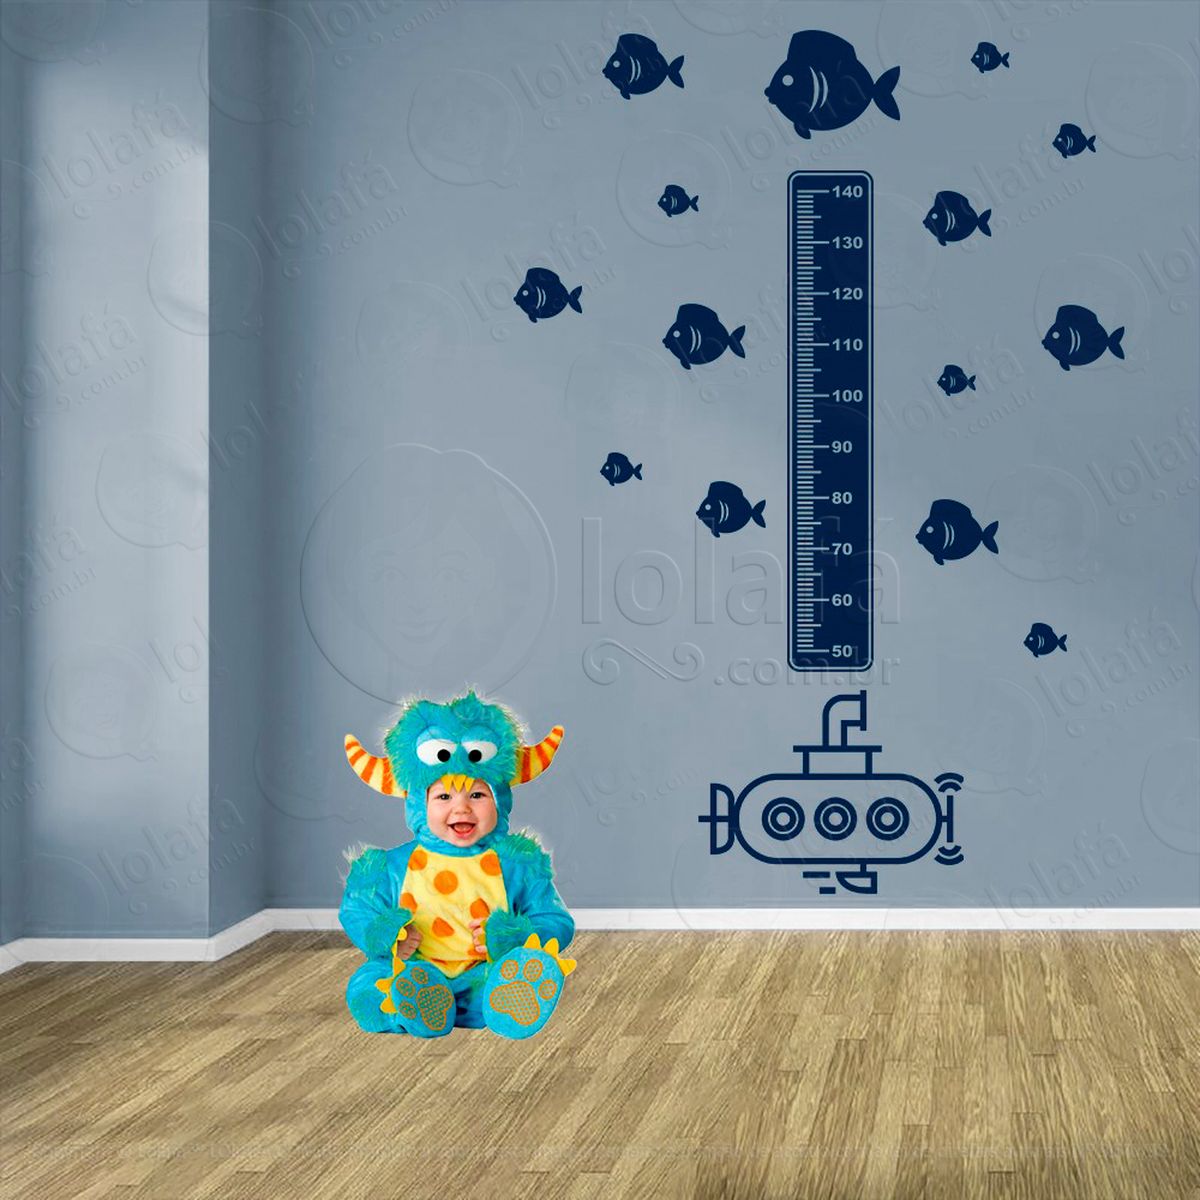 submarino e peixes adesivo régua de crescimento infantil, medidor de altura para quarto, porta e parede - mod:1479